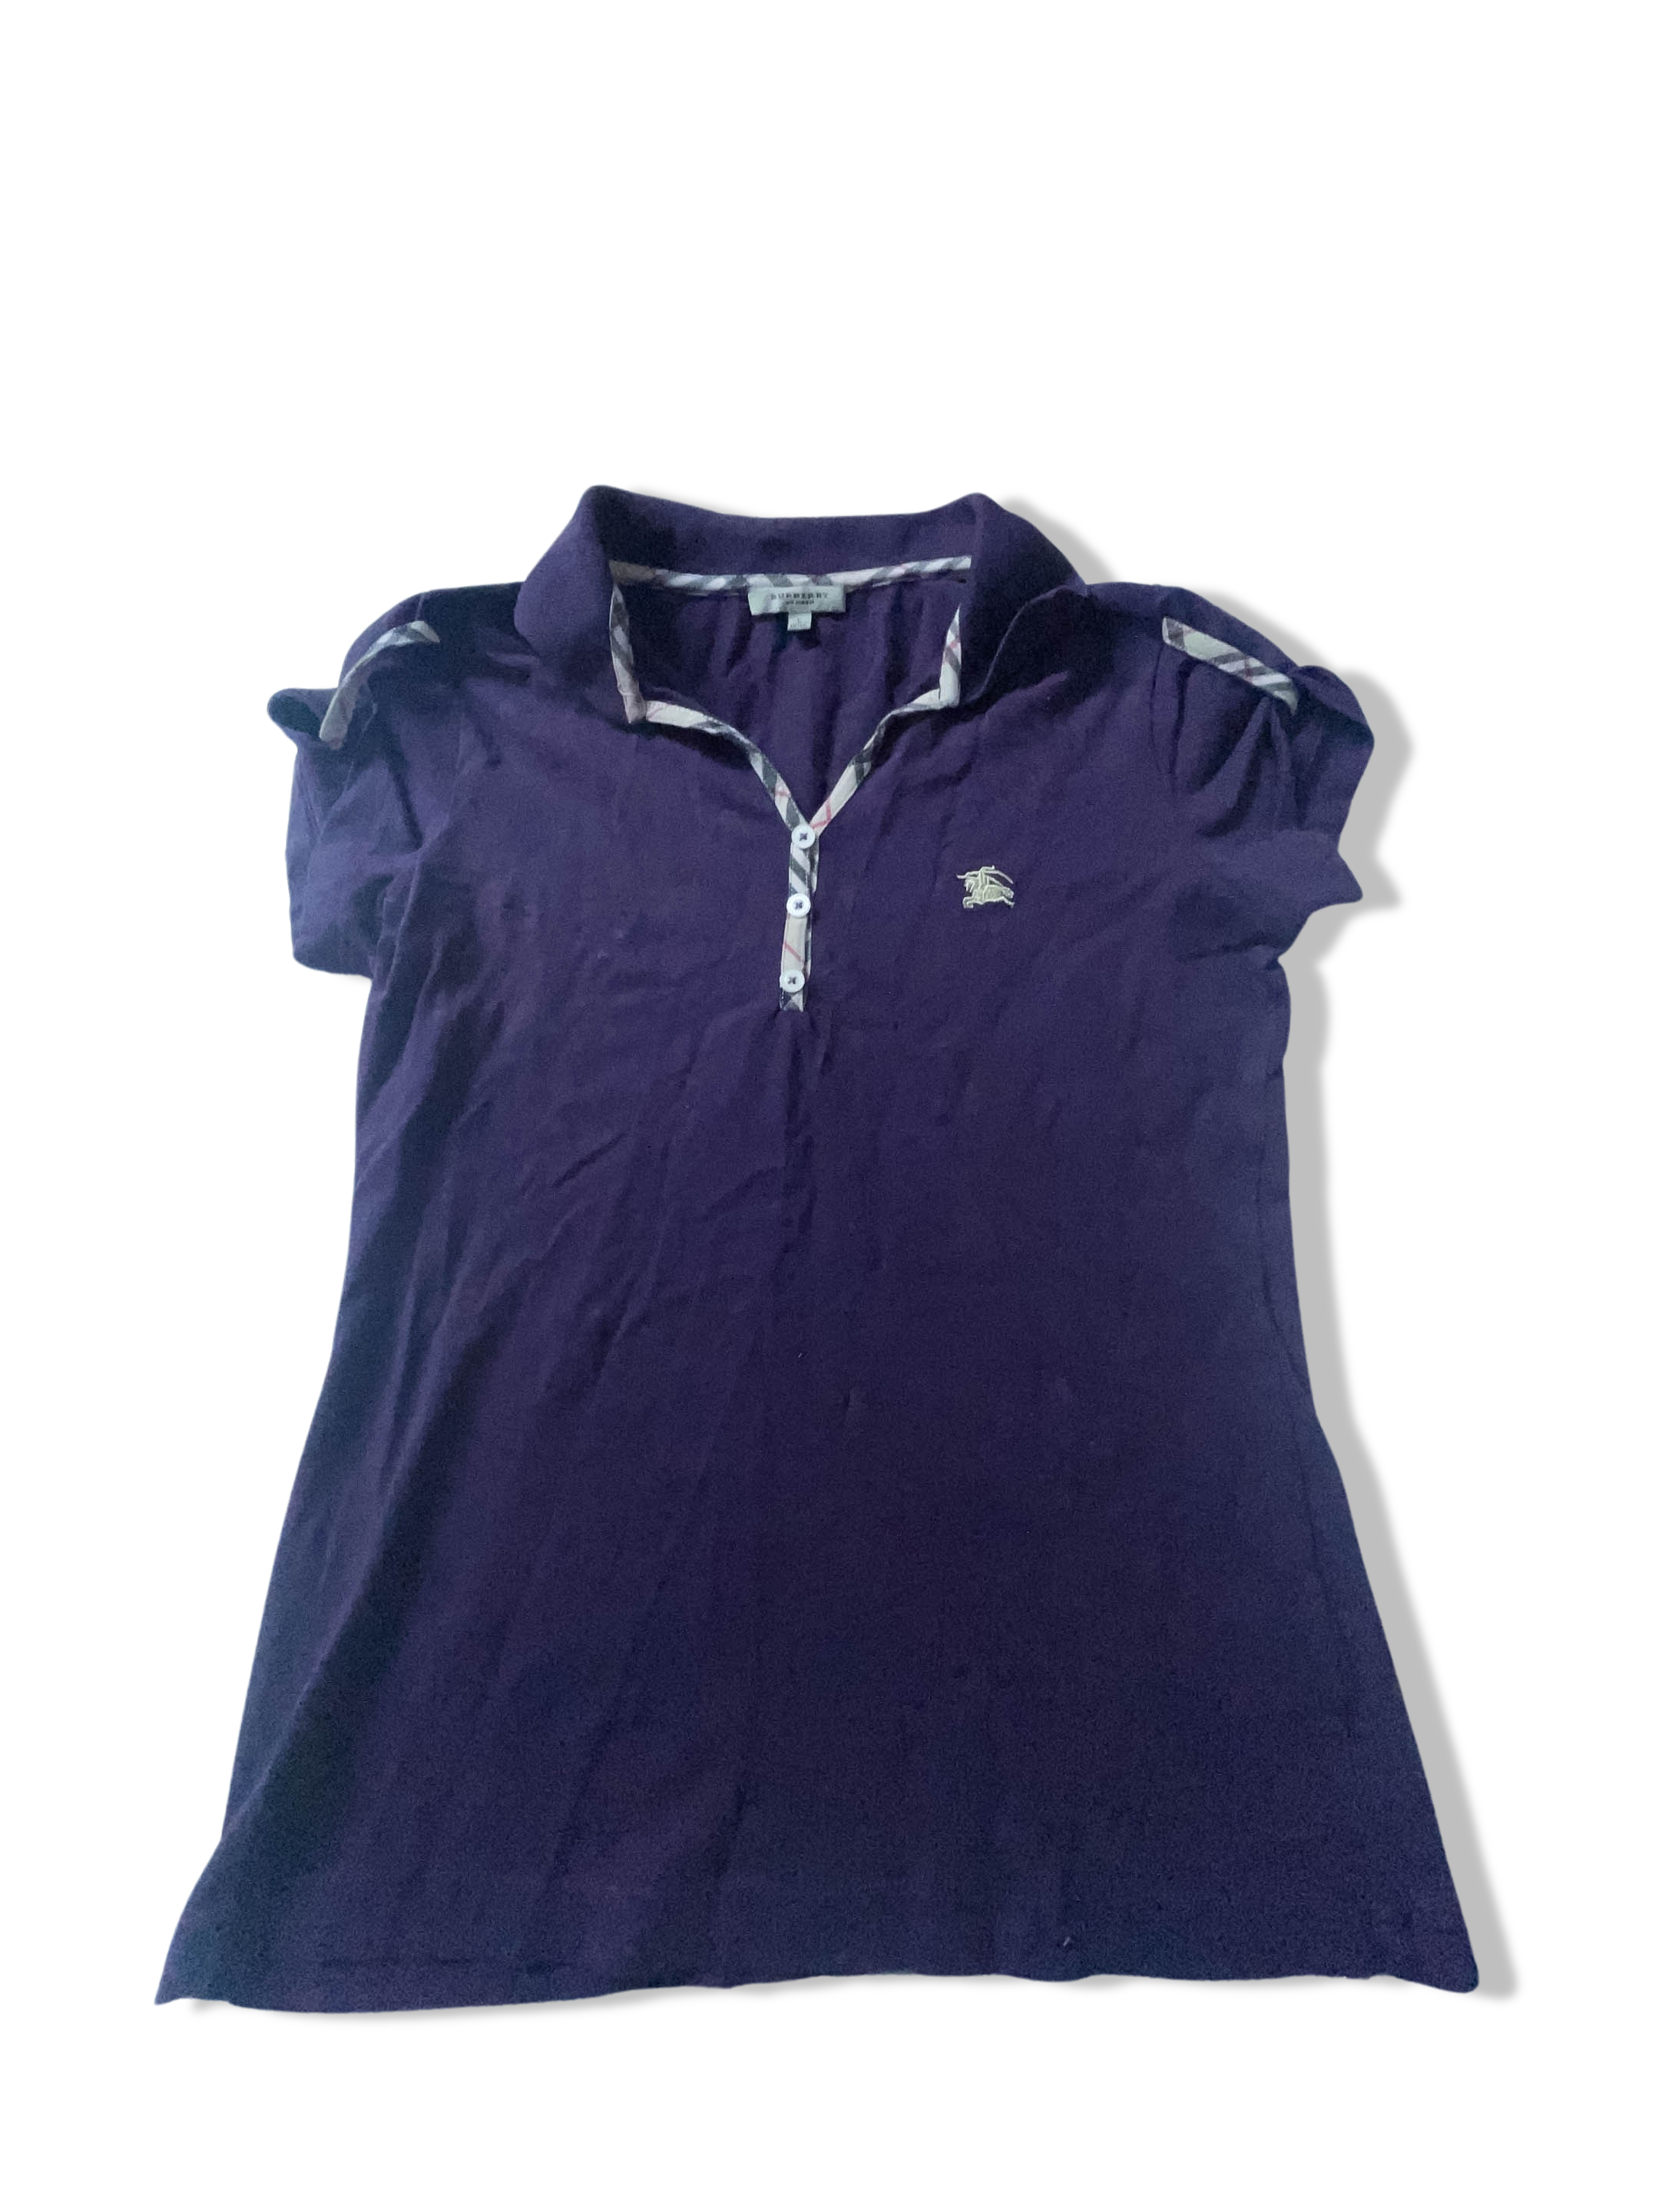 Vintage Womens Burberry London purple large polo shirt